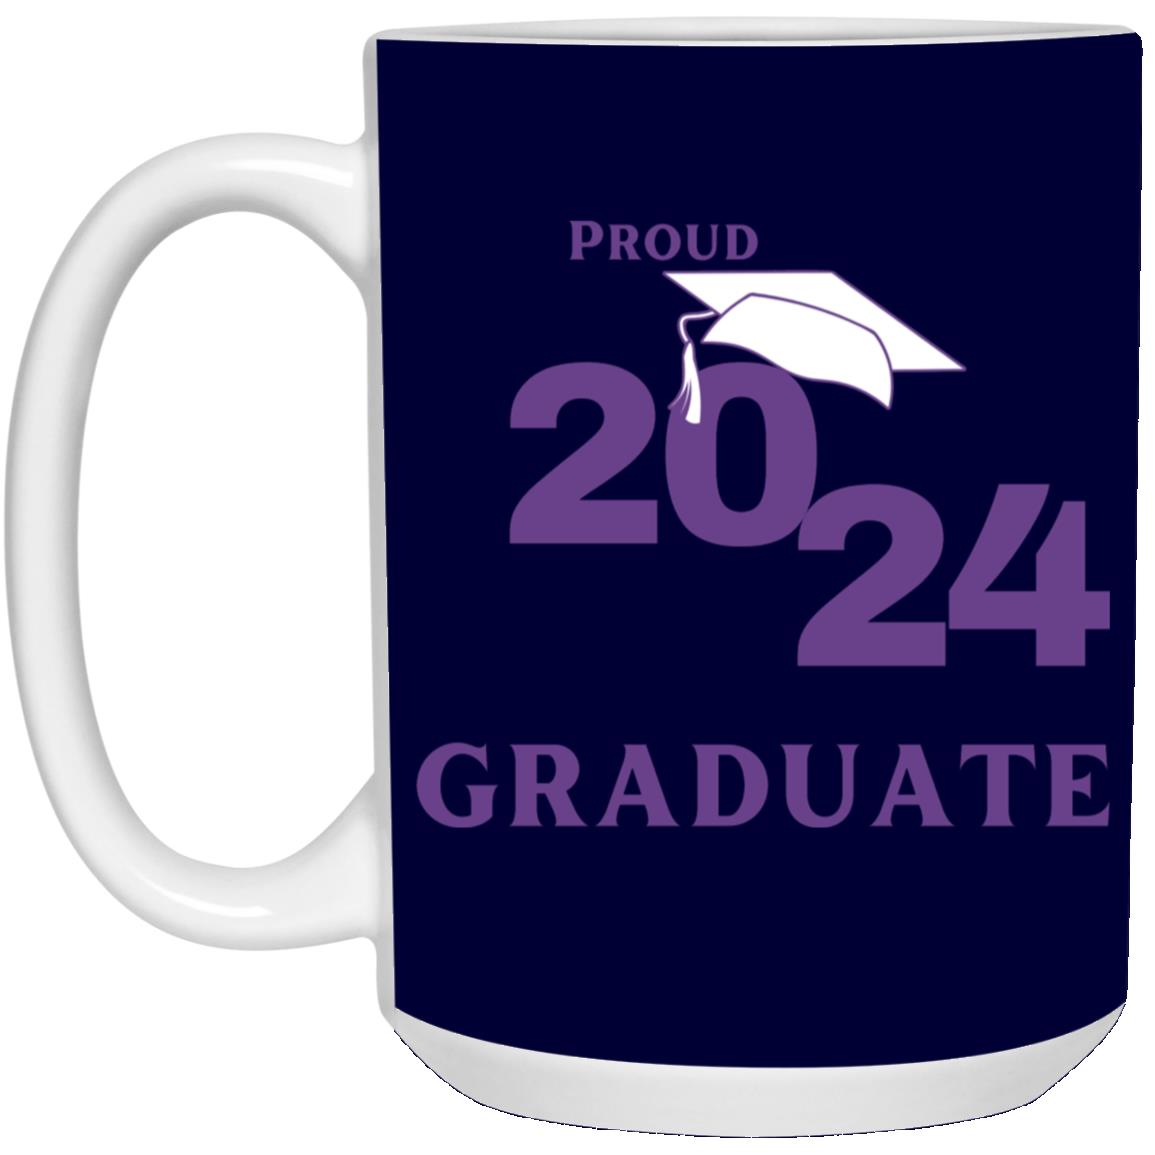 Proud graduate 2024 purple 21504 15oz White Mug